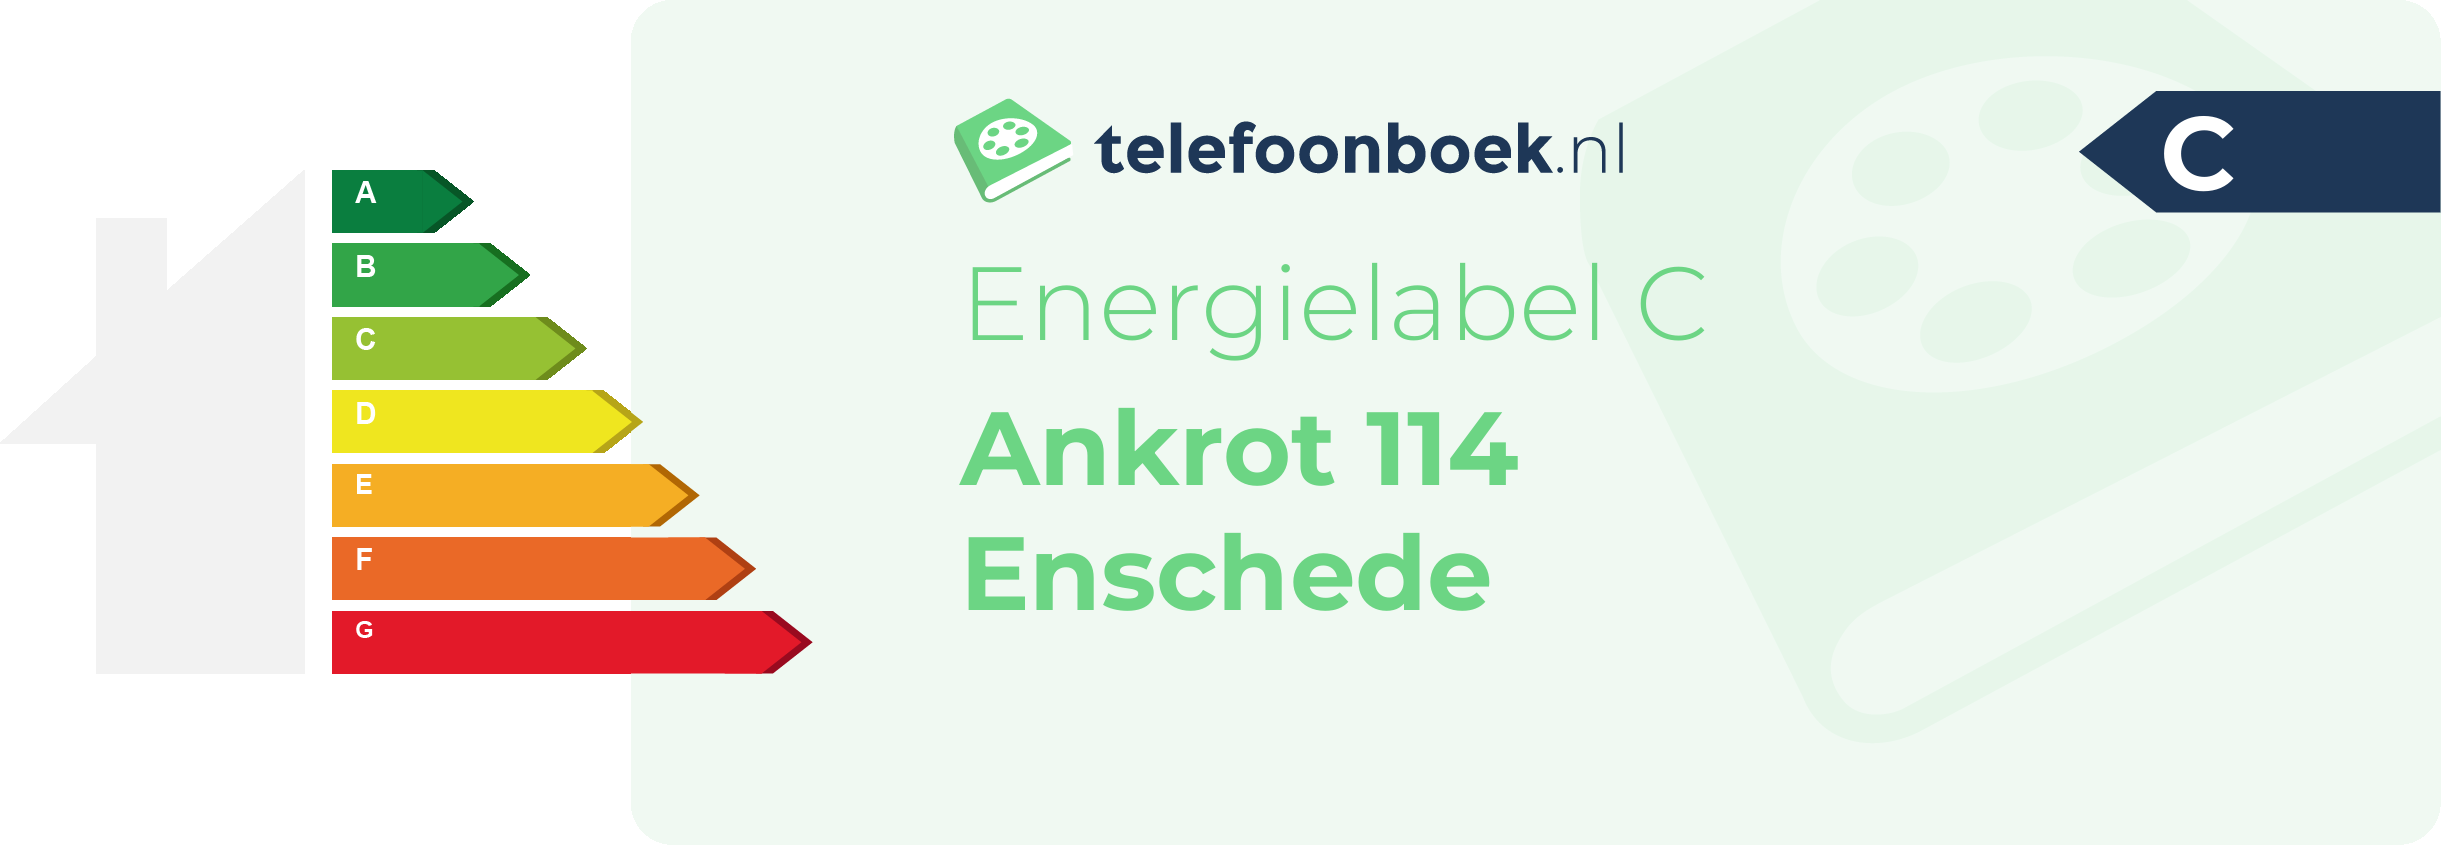 Energielabel Ankrot 114 Enschede